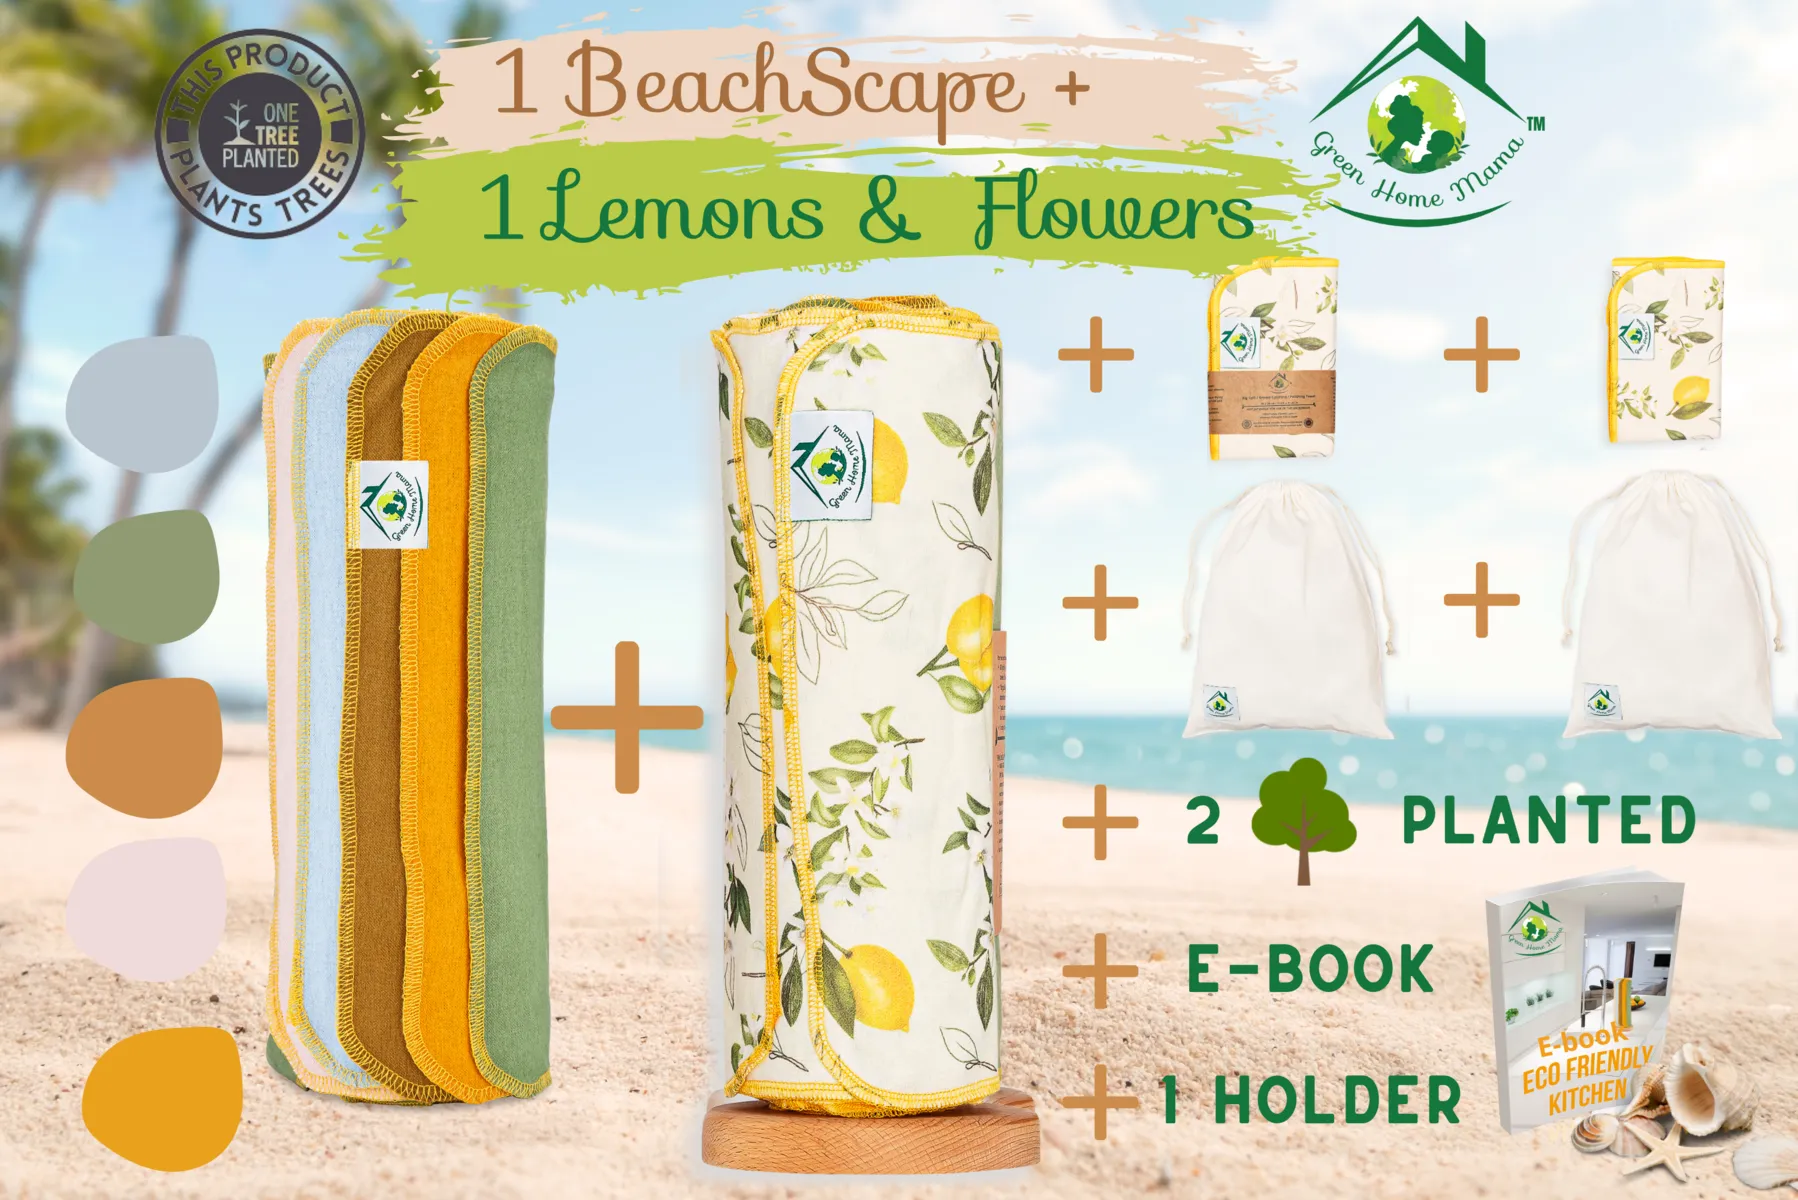  1 BEACHSCAPE + 1 LEMONS & FLOWERS Bundle: 1 Roll Lemons & Flowers + 1 Roll BeachScape 28 Reusable Unpaper Towels + Two 2-ply towels, 2 cotton bags, 1 holder, 1 E-book, 2 trees planted